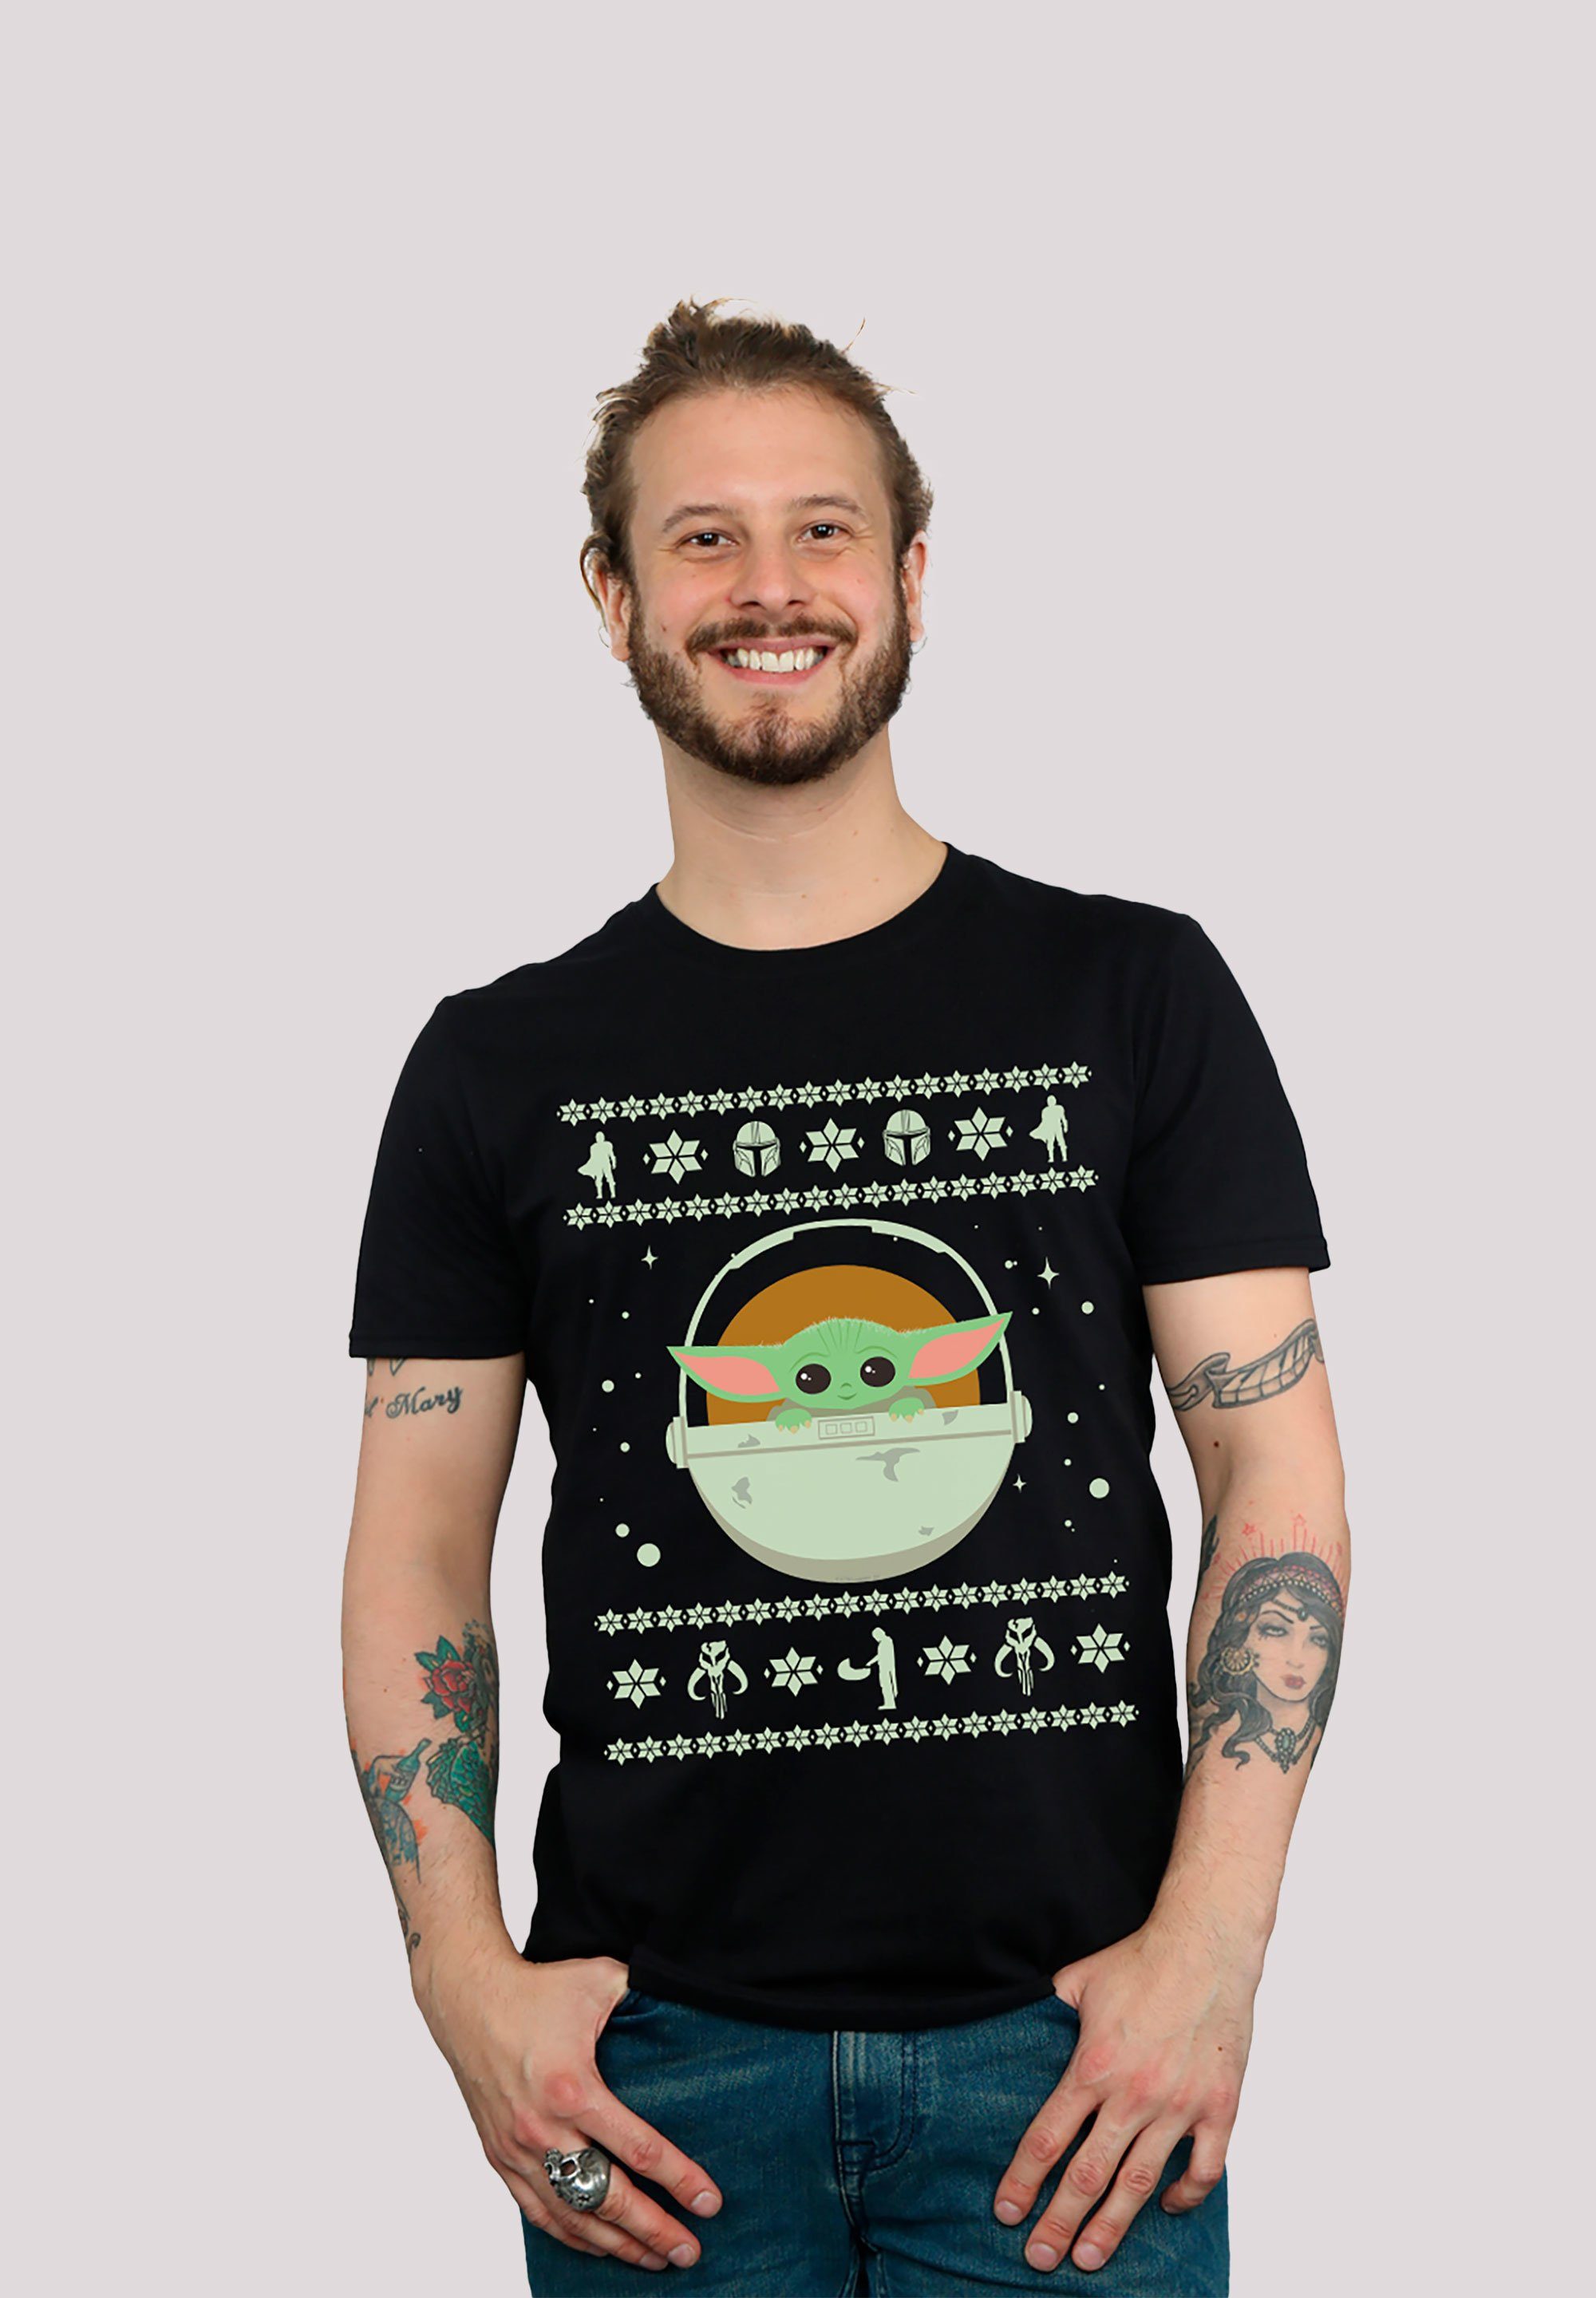 F4NT4STIC T-Shirt Star Star The Christmas Child Mandalorian Wars Print, Wars Mandalorian Yoda The The Baby